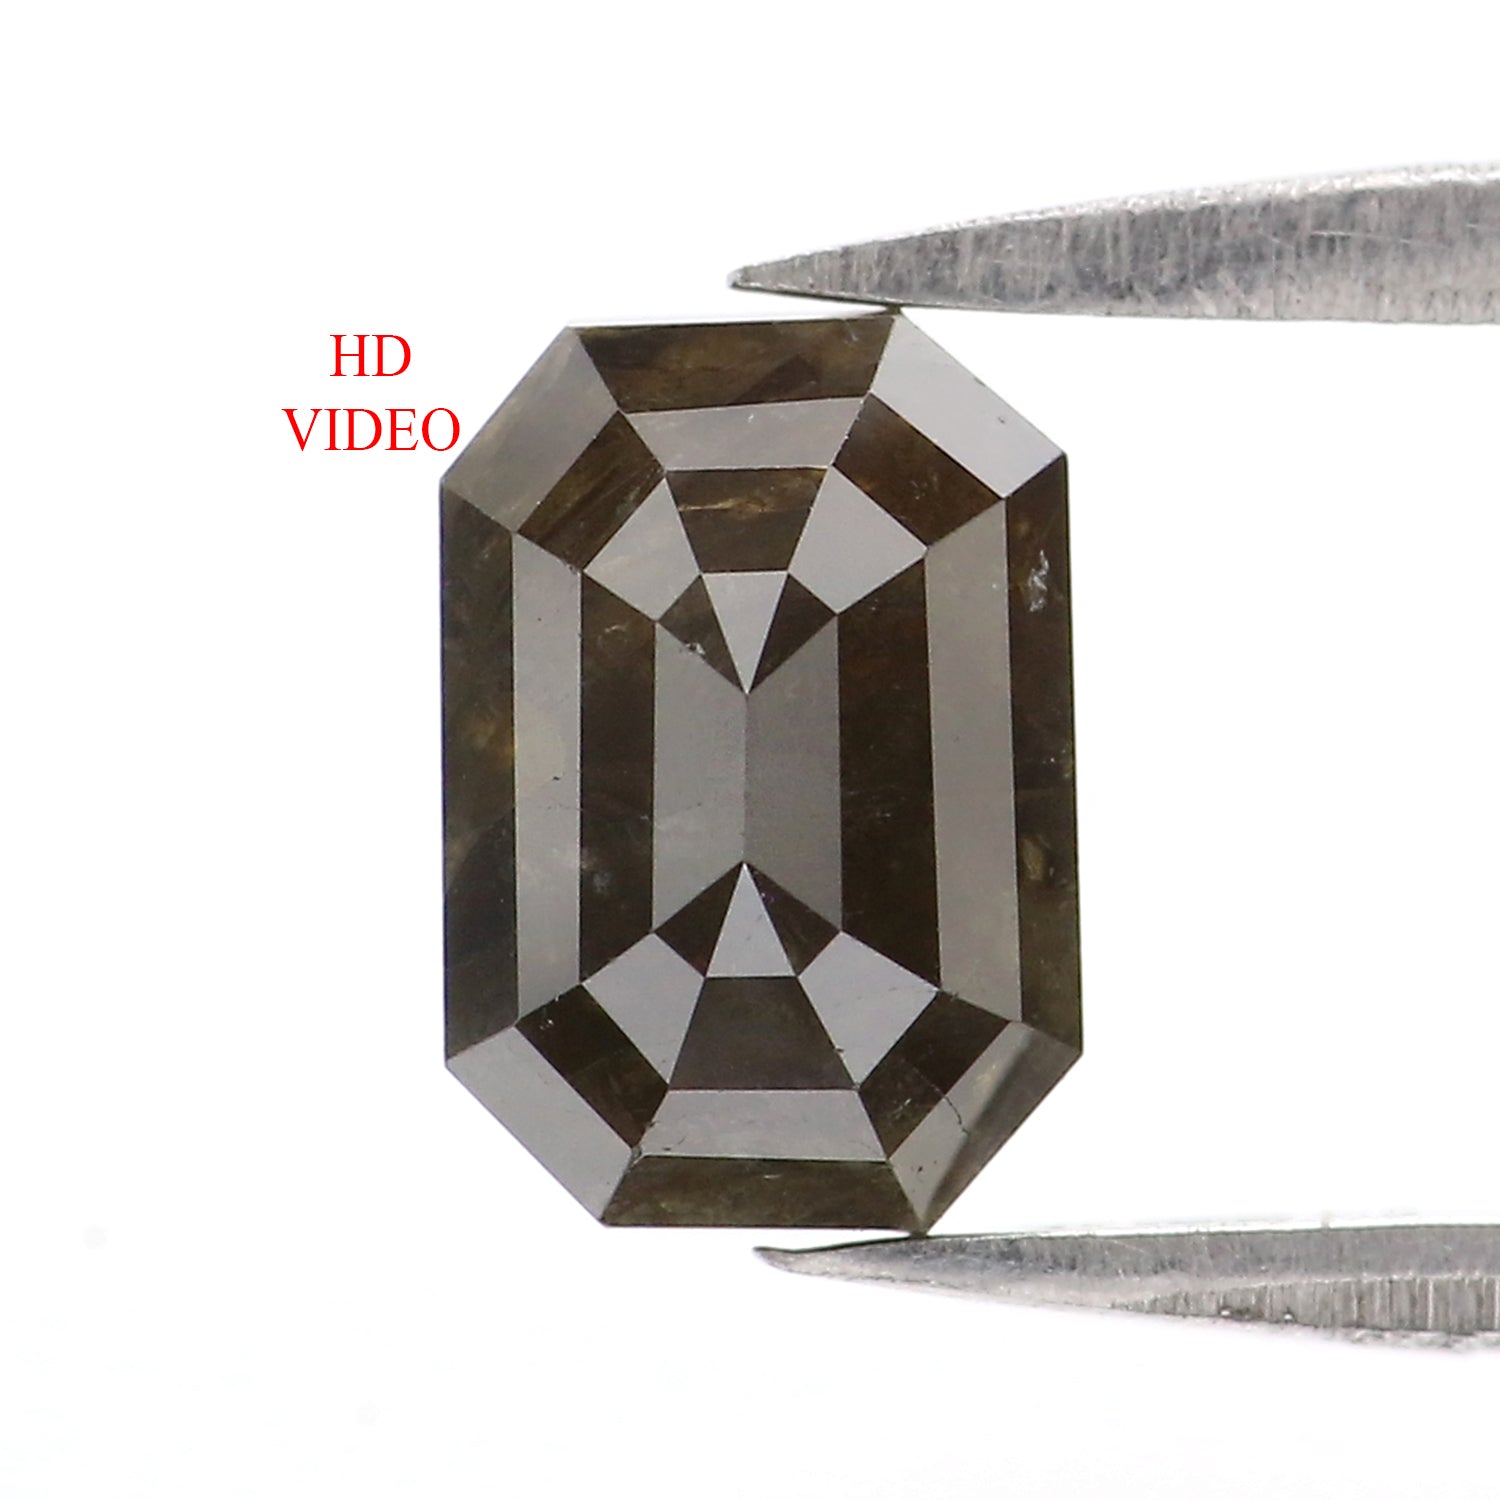 1.67 CT Natural Loose Emerald Shape Diamond Black Emerald Shape Diamond 7.80 MM Natural Loose  Black Color Emerald Rose Cut Diamond QL2853